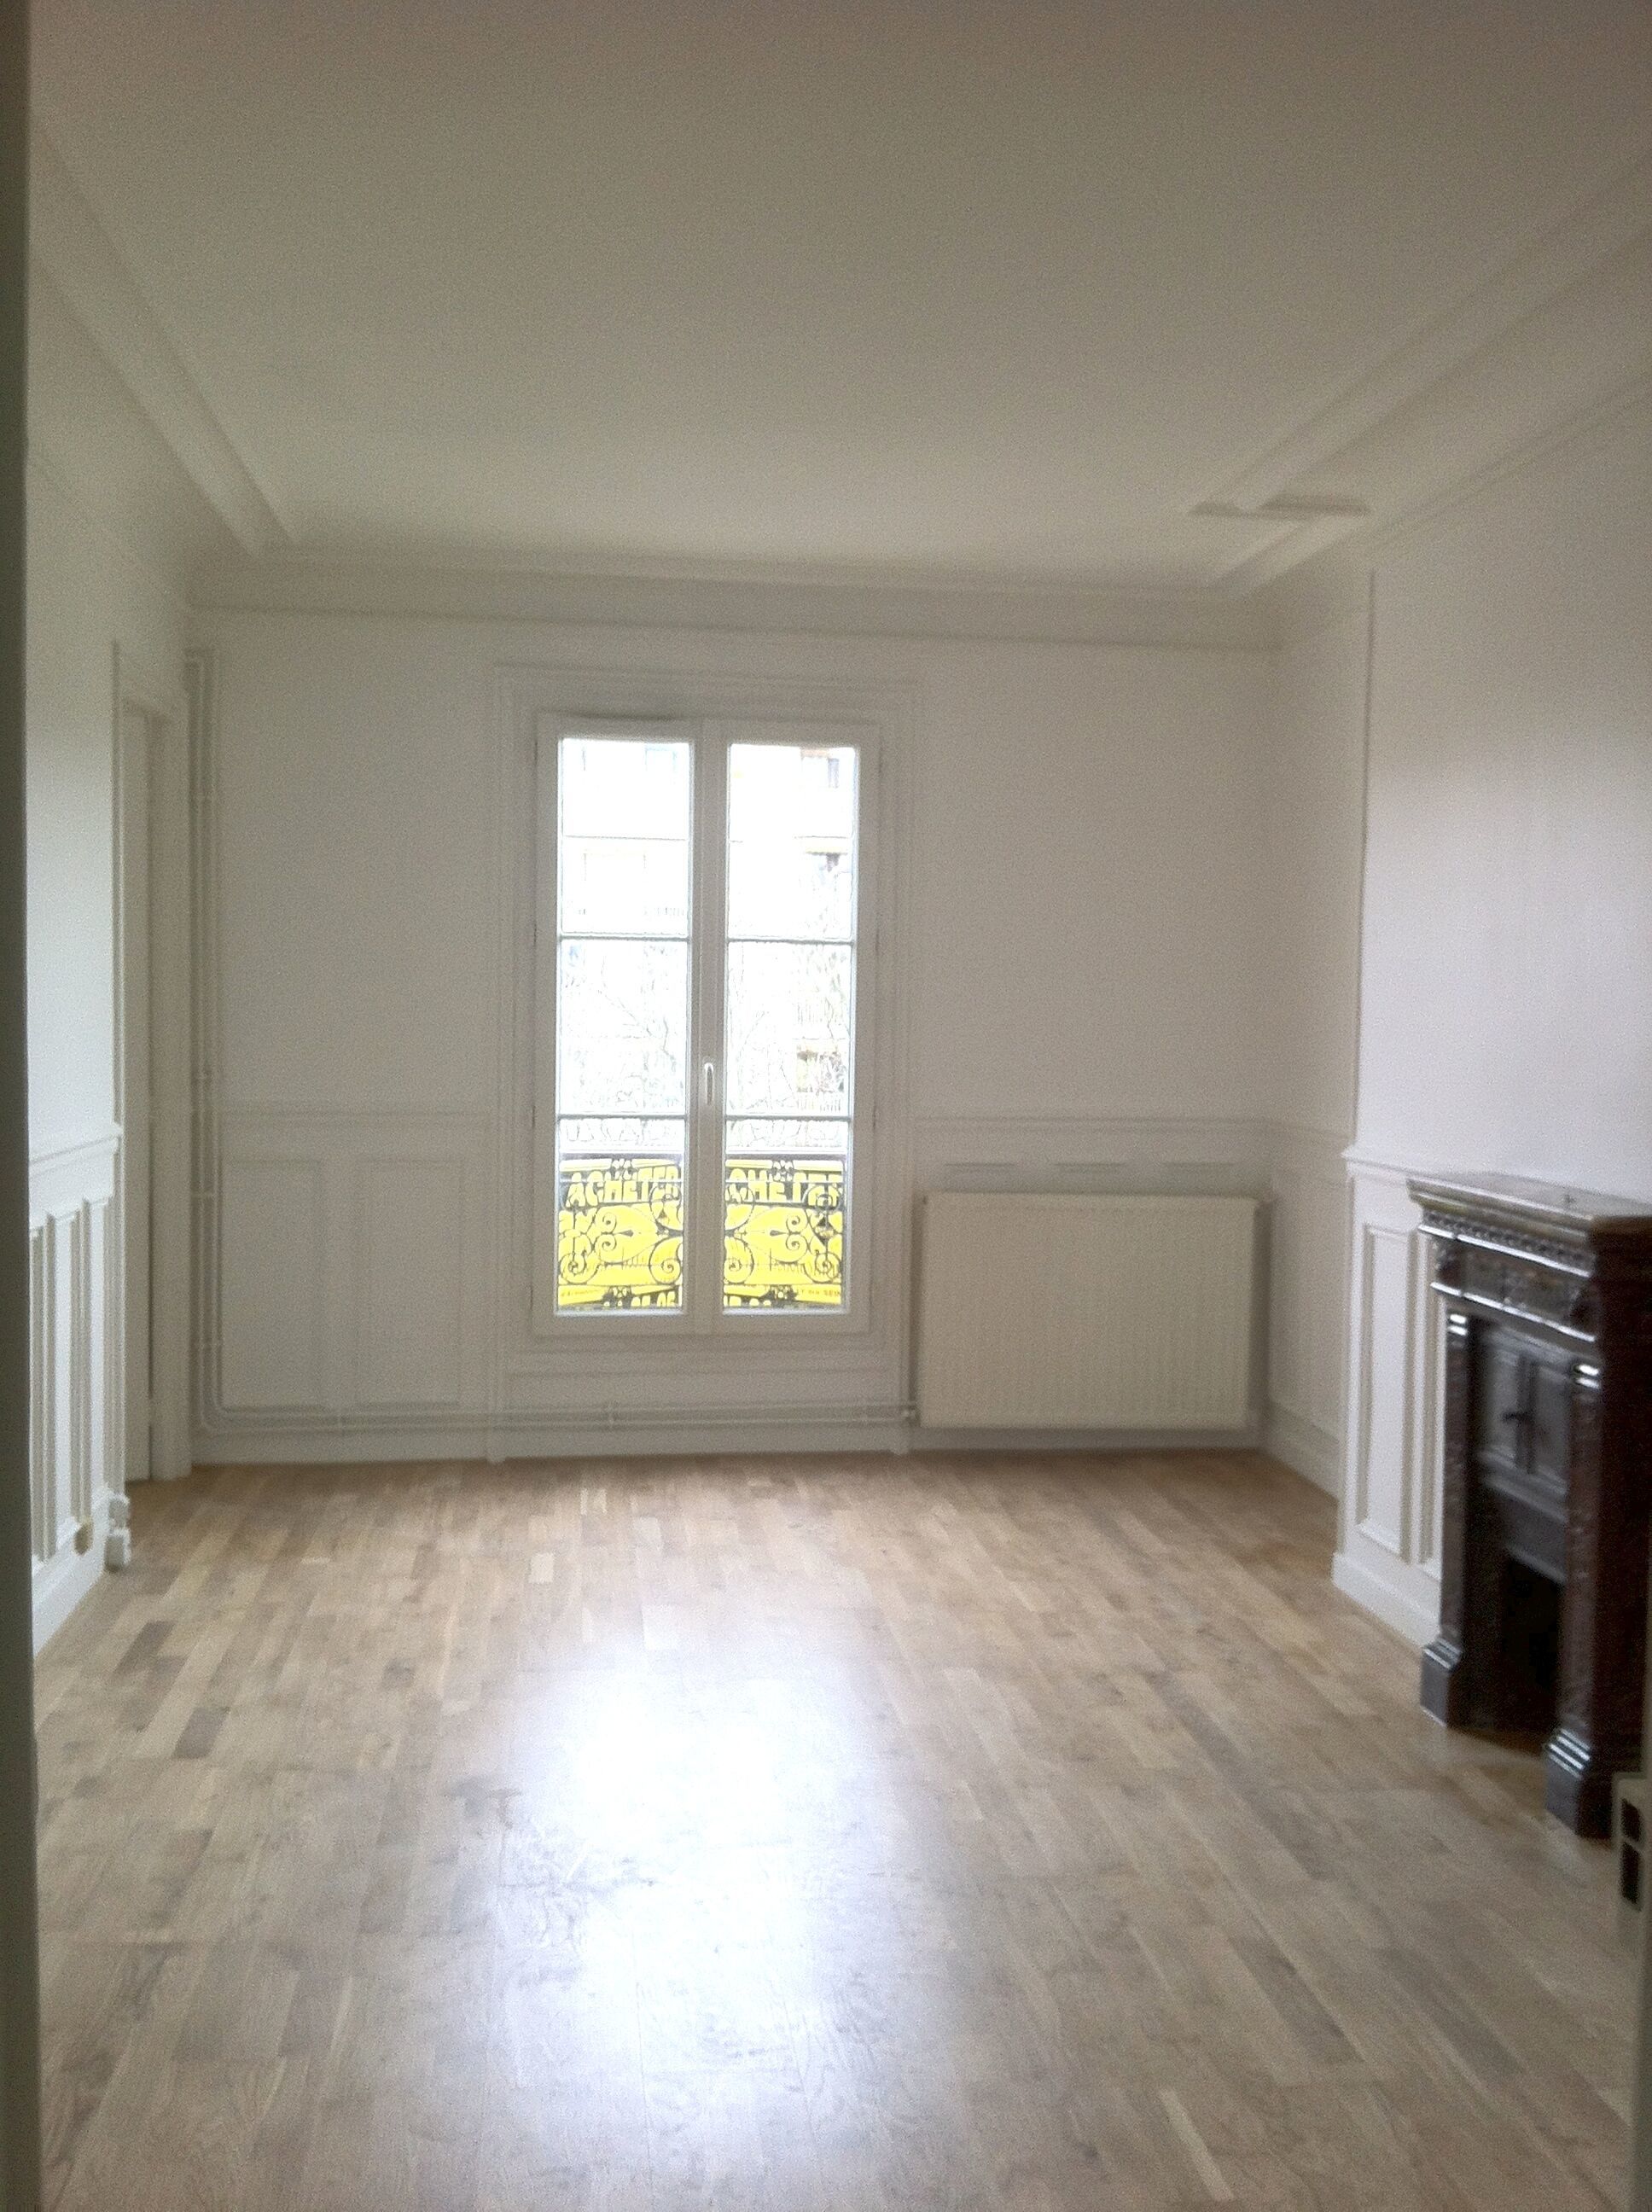 Appartement 2 pièce(s) undefined m²à louer Neuilly-sur-seine